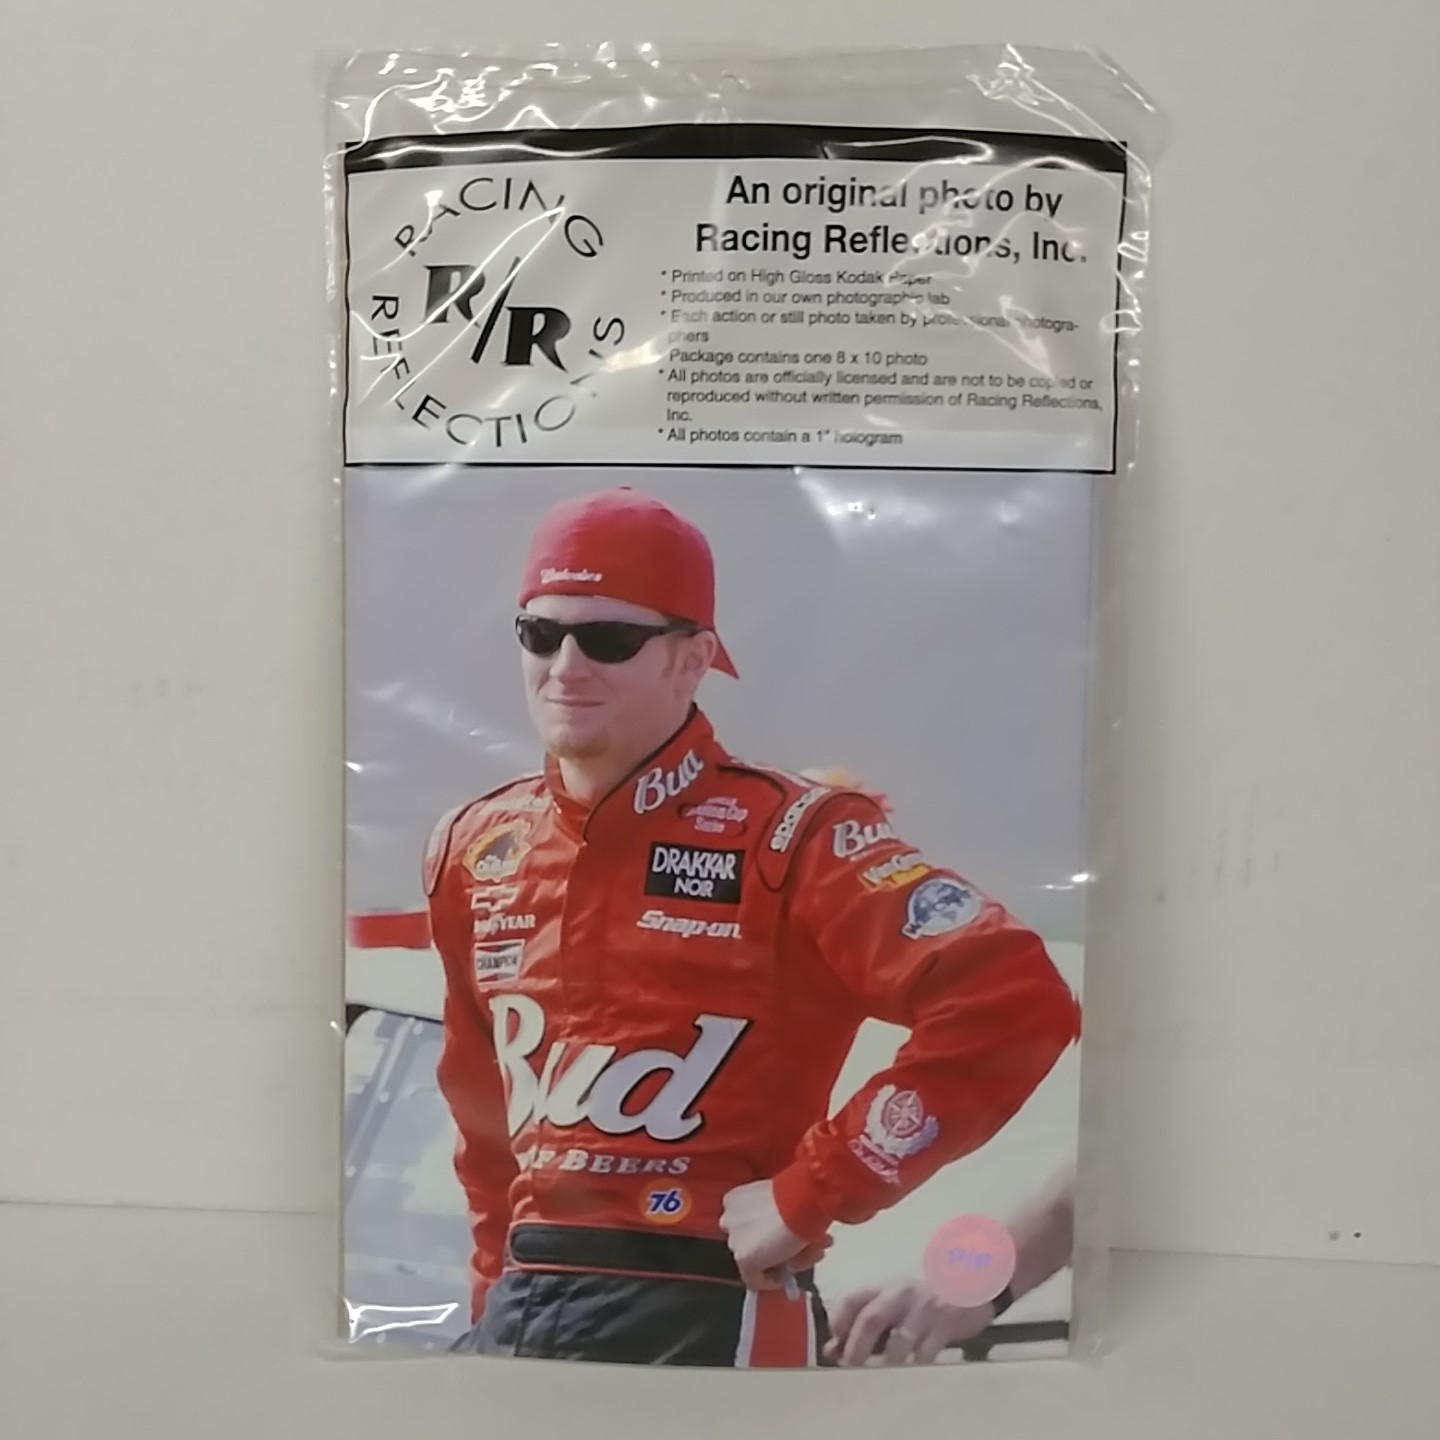 2003 Dale Earnhardt Jr Budweiser "Hat Backwards" Racing Reflections Photo